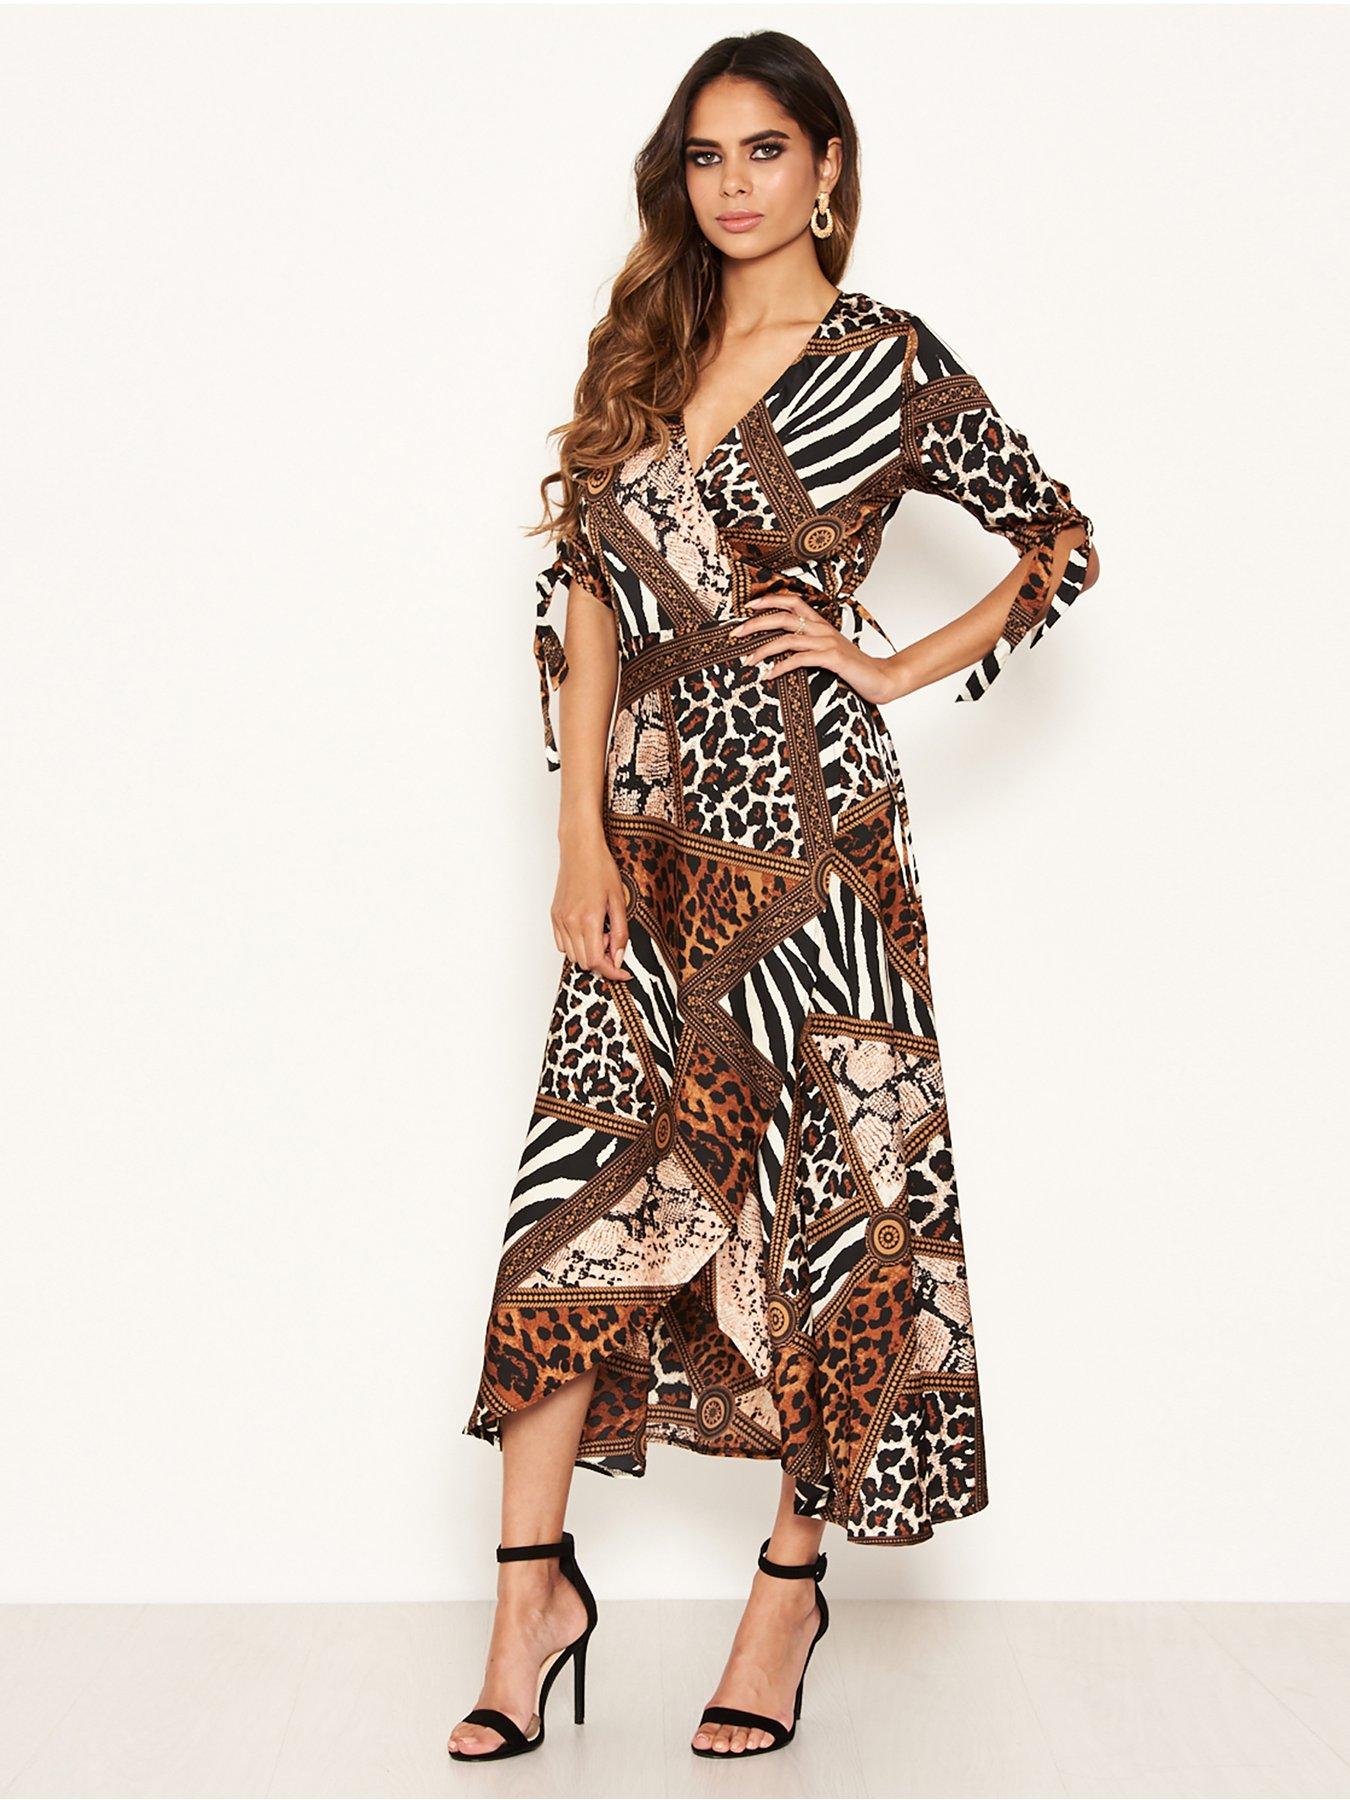 ax paris leopard print dress